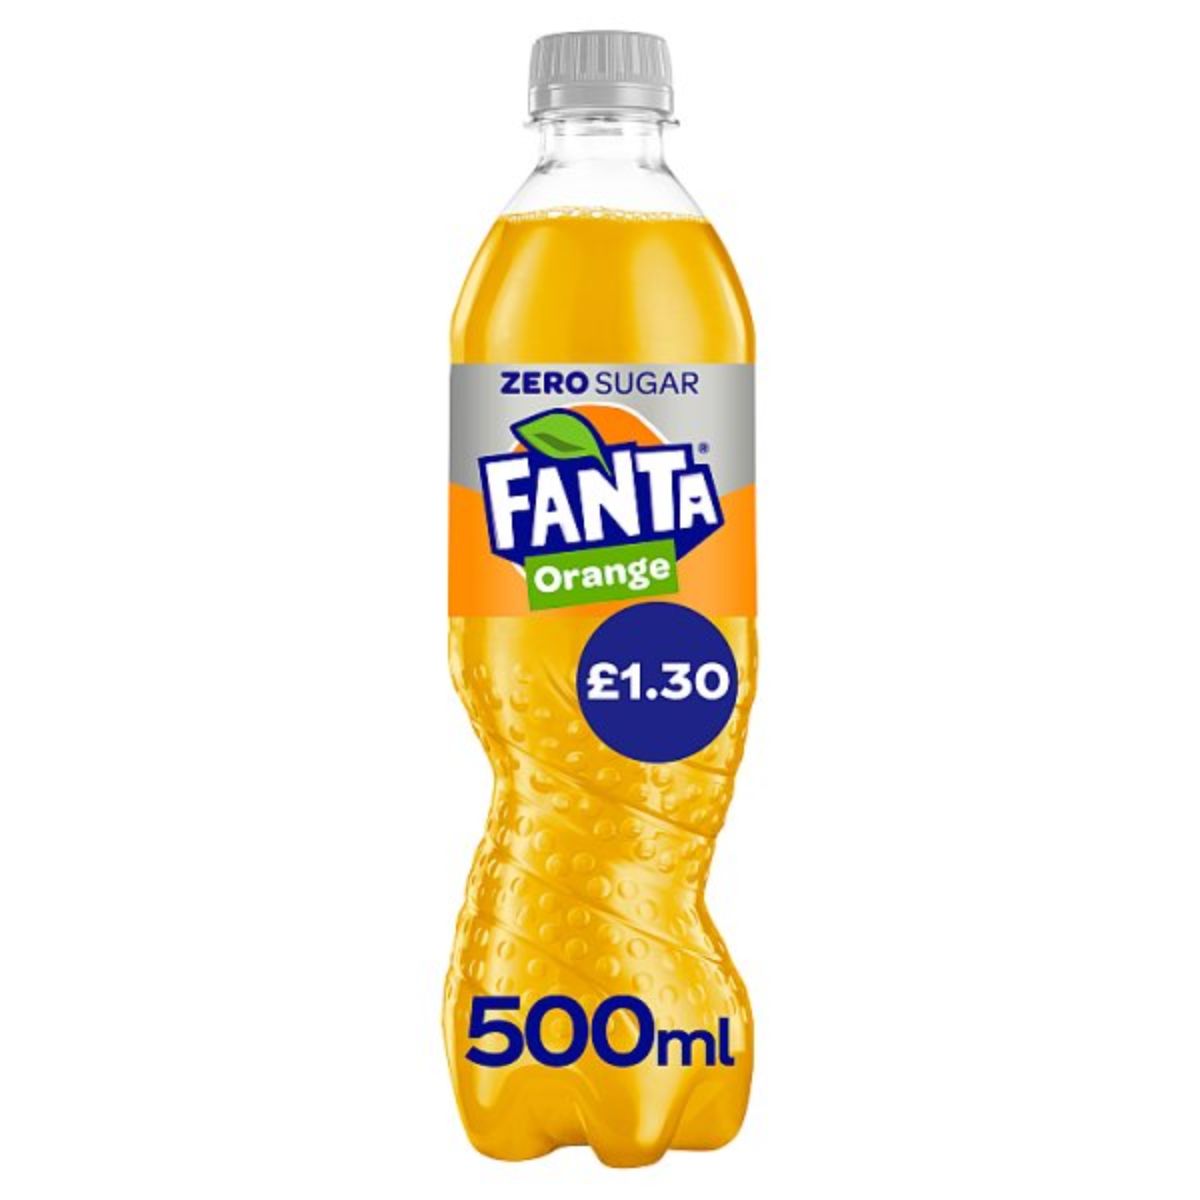 A bottle of Fanta Orange Zero - 500g on a white background.